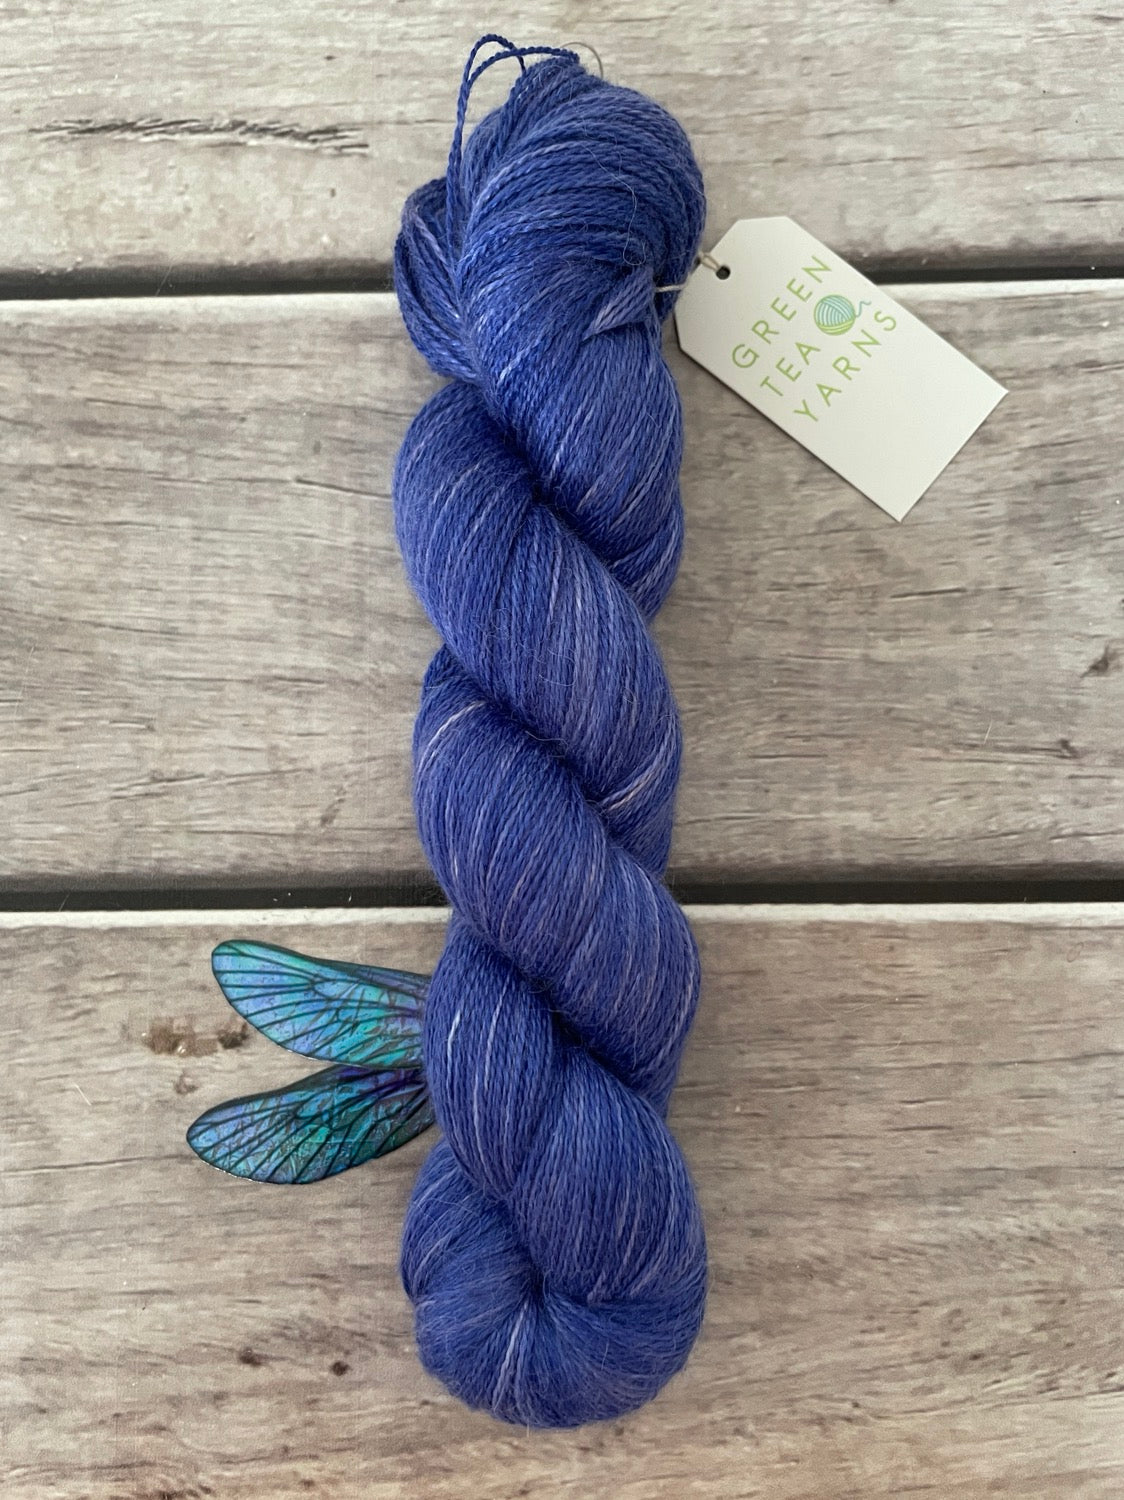 Blue Boy ooak - 2 Ply in silk and alpaca - Echinacea